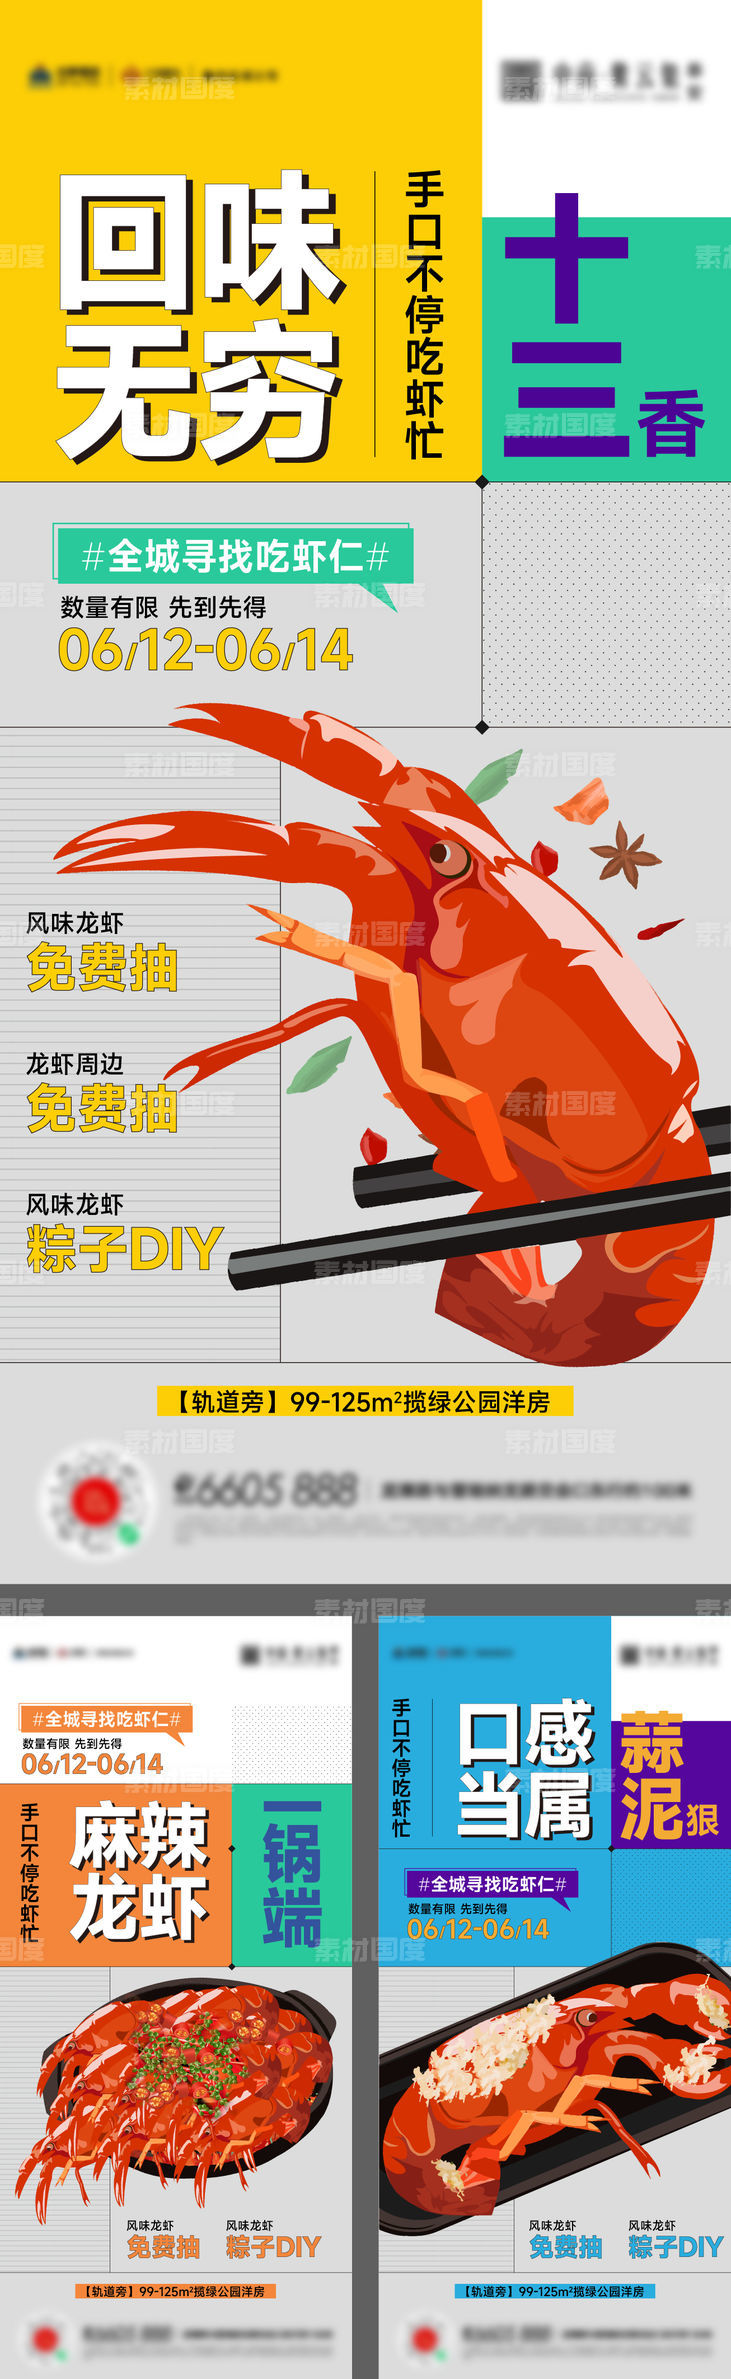 龙虾美食活动海报